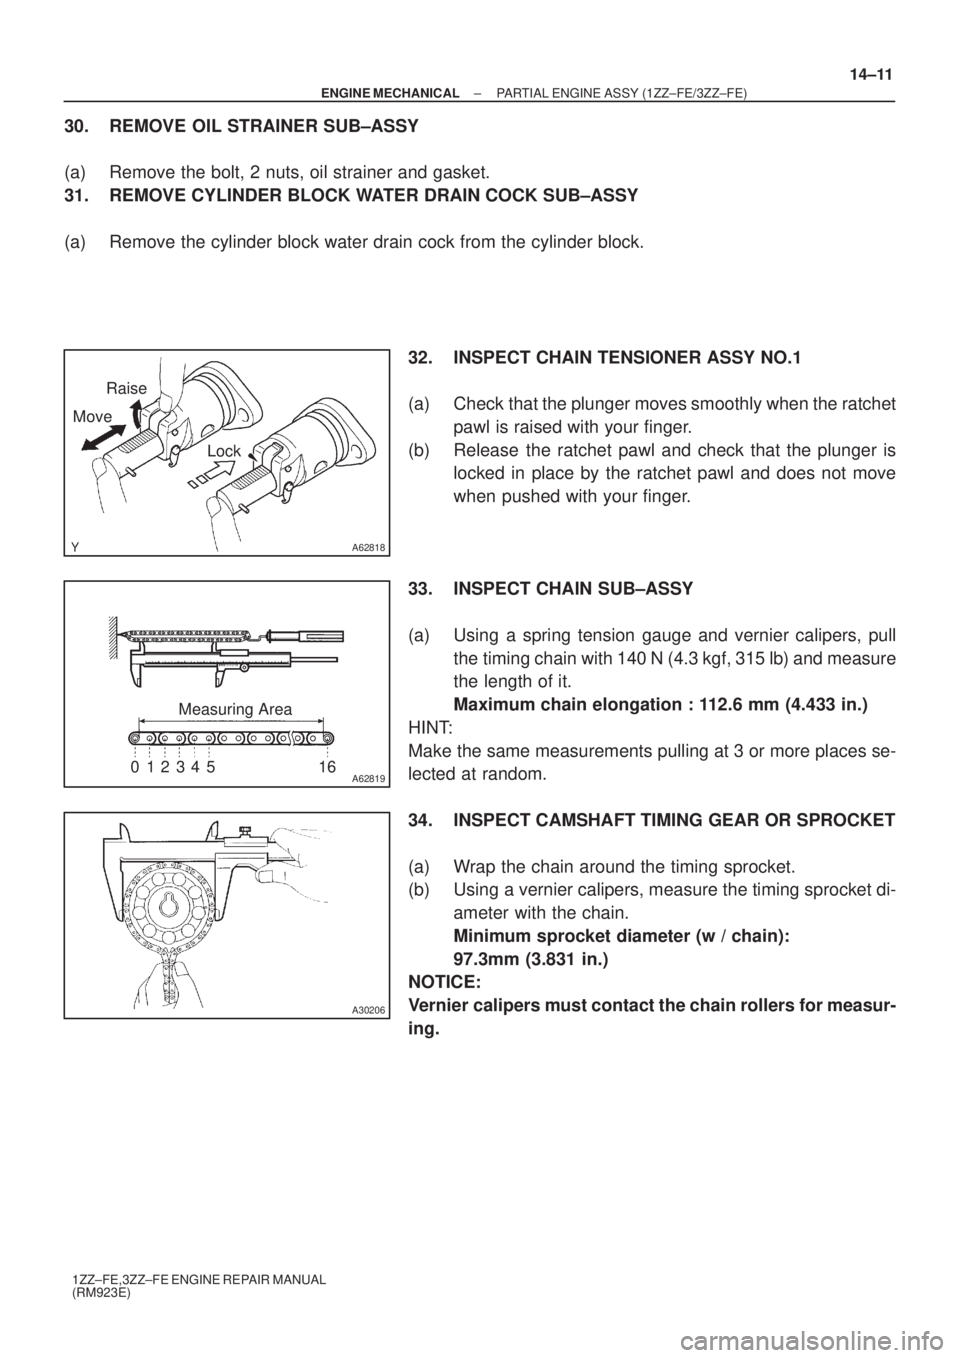 TOYOTA AVENSIS 2005  Service Repair Manual A62818
Raise
Move
Lock
A62819
Measuring Area
012345 16
A30206
± ENGINE MECHANICALPARTIAL ENGINE ASSY (1ZZ±FE/3ZZ±FE)
14±11
1ZZ±FE,3ZZ±FE ENGINE REPAIR MANUAL
(RM923E)
30. REMOVE OIL STRAINER SUB